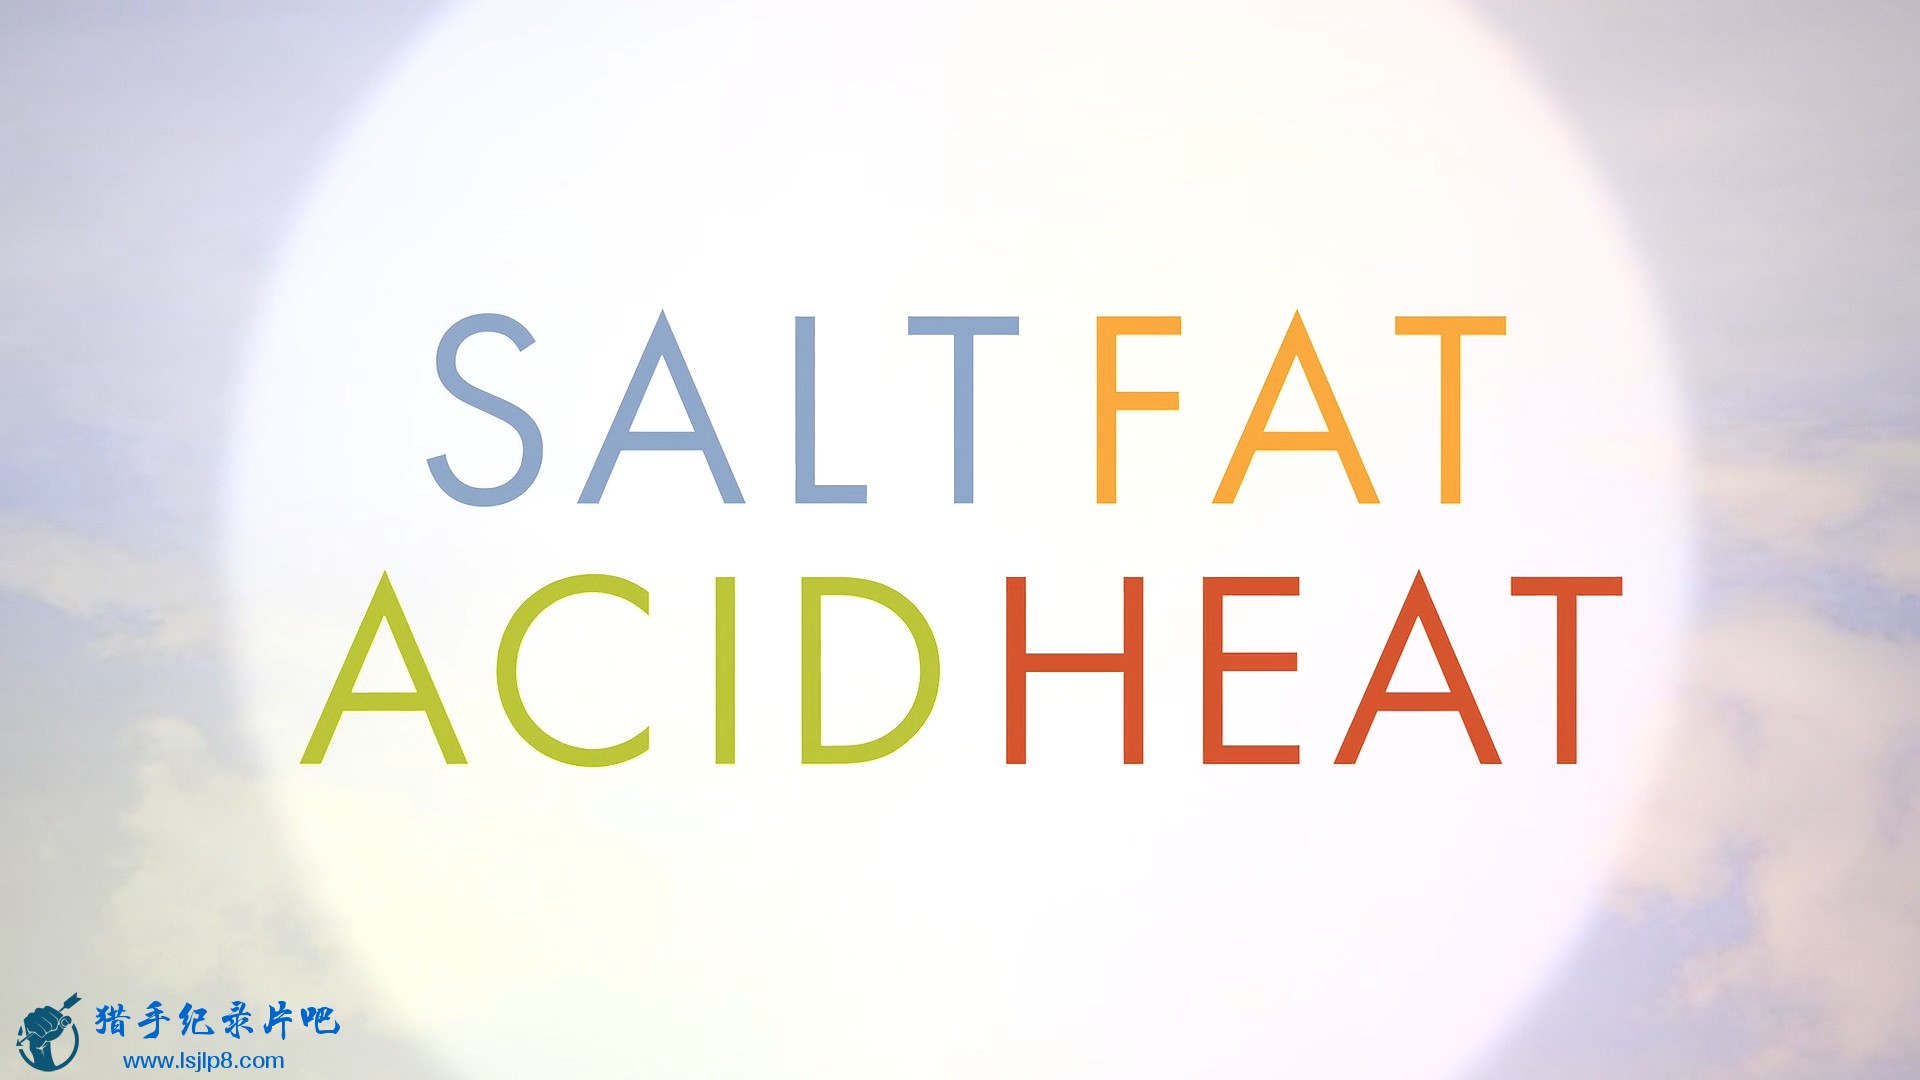 Salt.Fat.Acid.Heat.S01E01.PROPER.1080p.WEB.X264-EDHD.mkv_20190930_100530.129.jpg